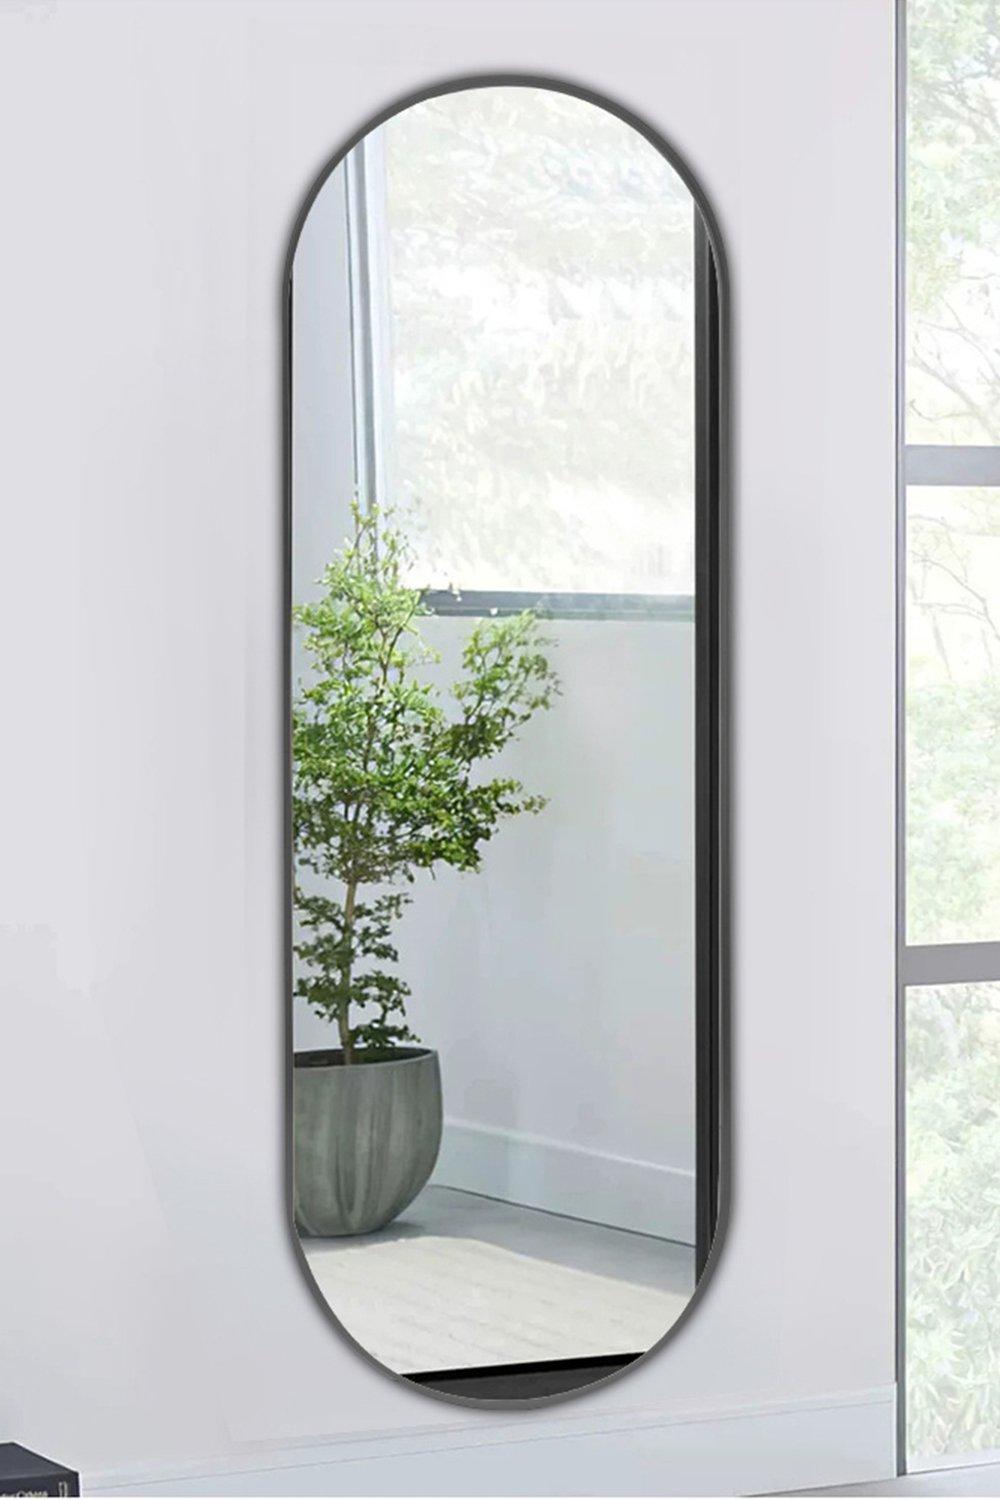 40cm W x 150cm H Modern Oval Metal Full Length Wall Mirror